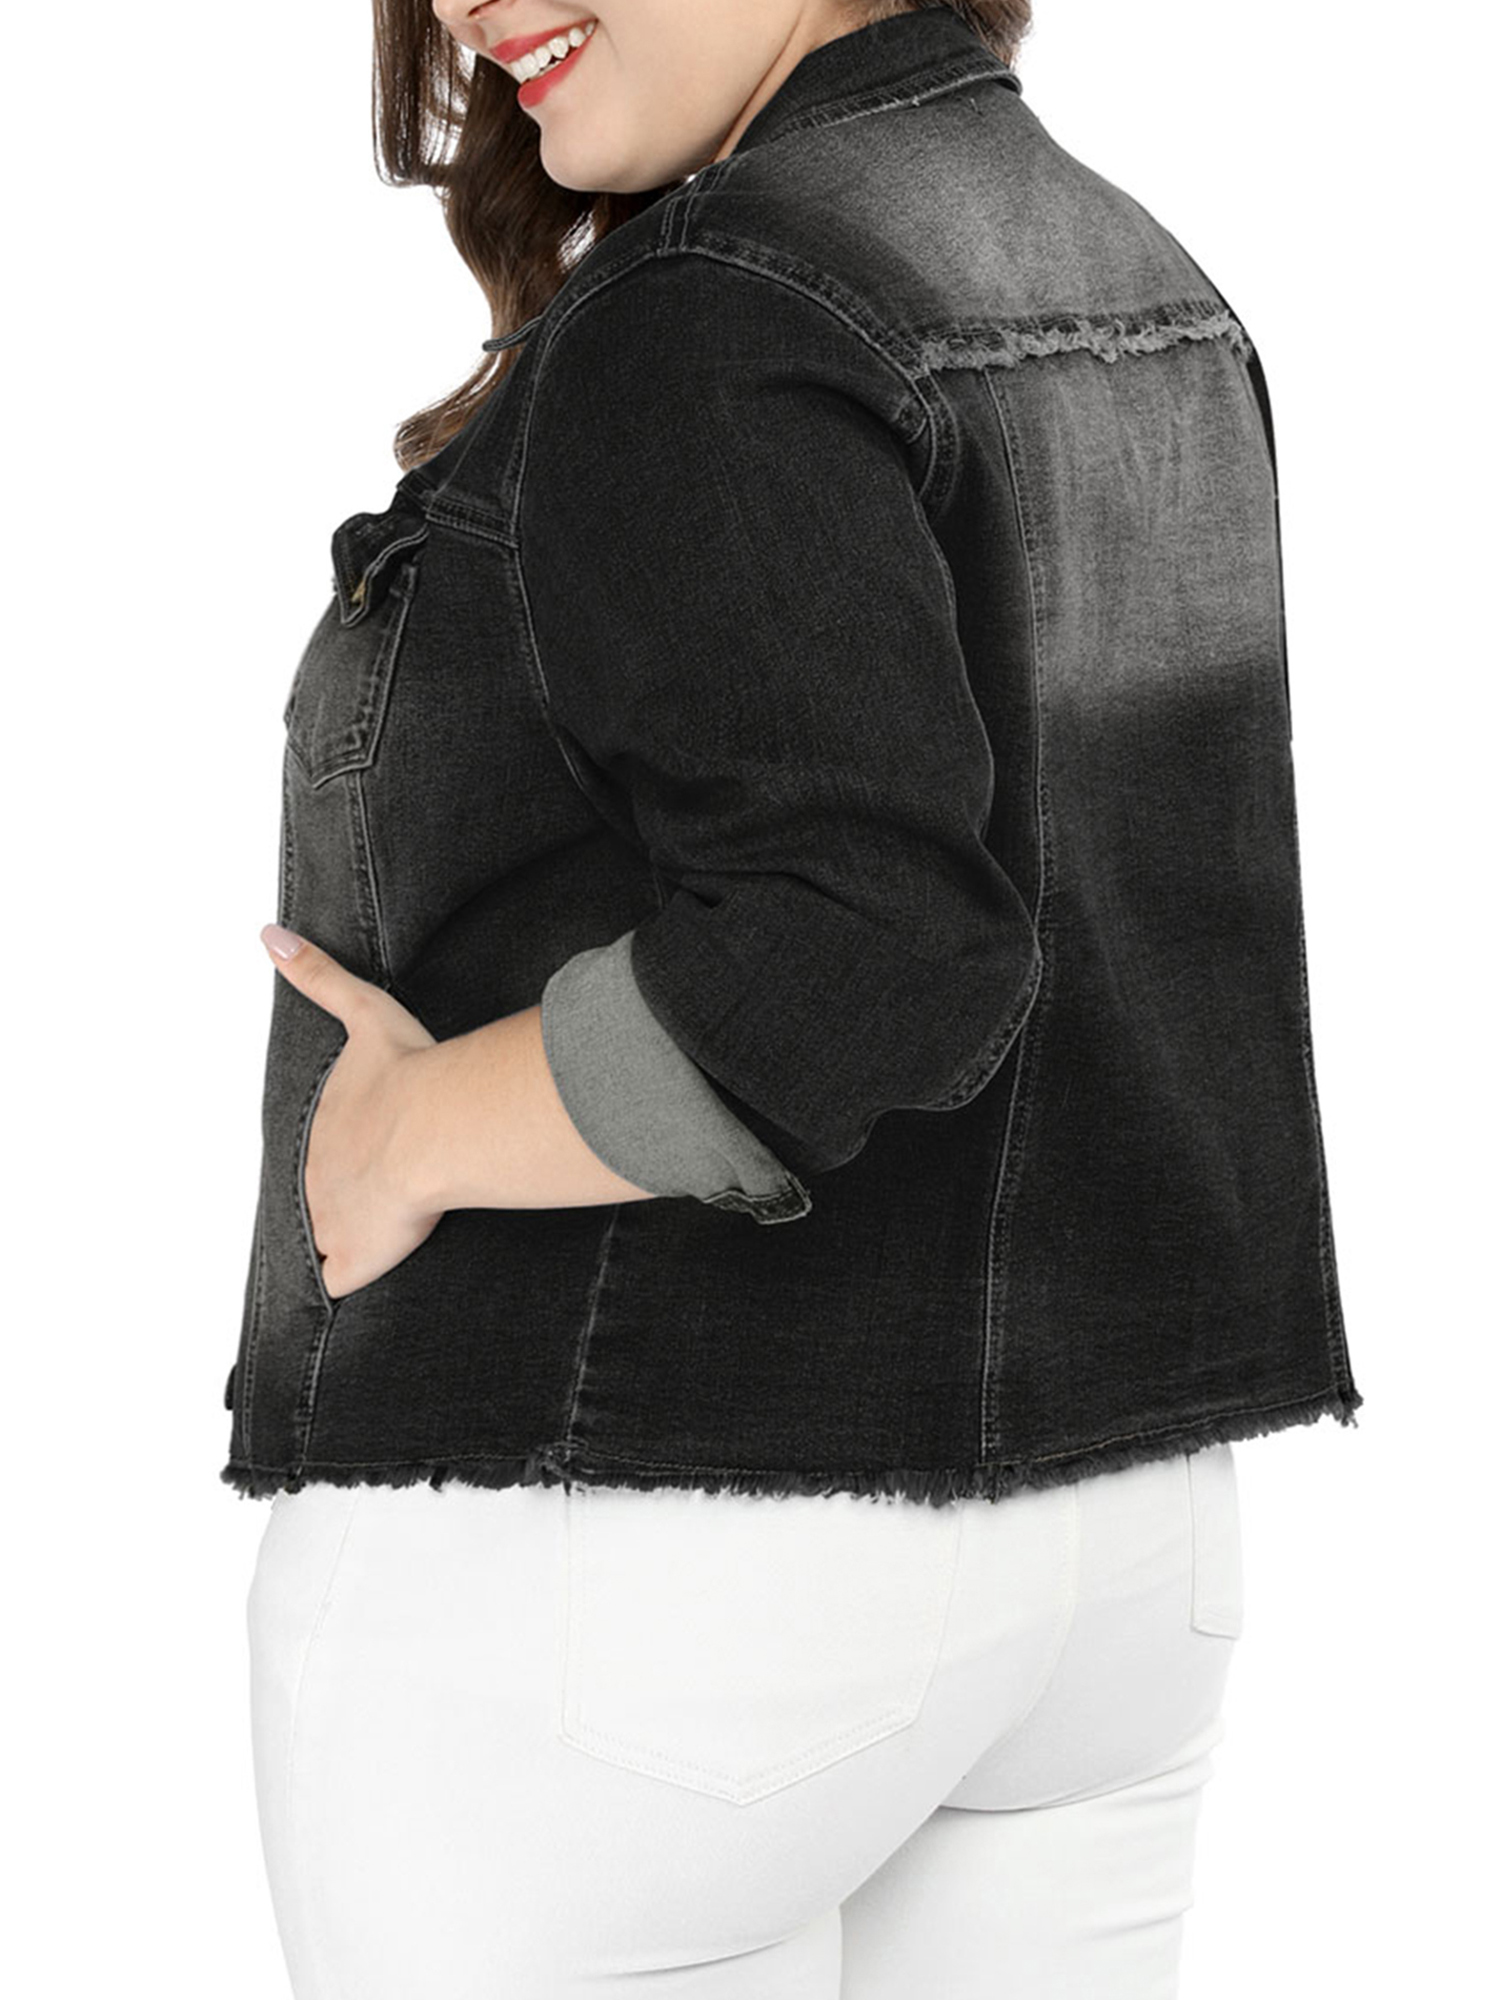 Unique Bargains Women's Plus Size Washed Front Frayed Classic Denim Jacket - image 5 of 8